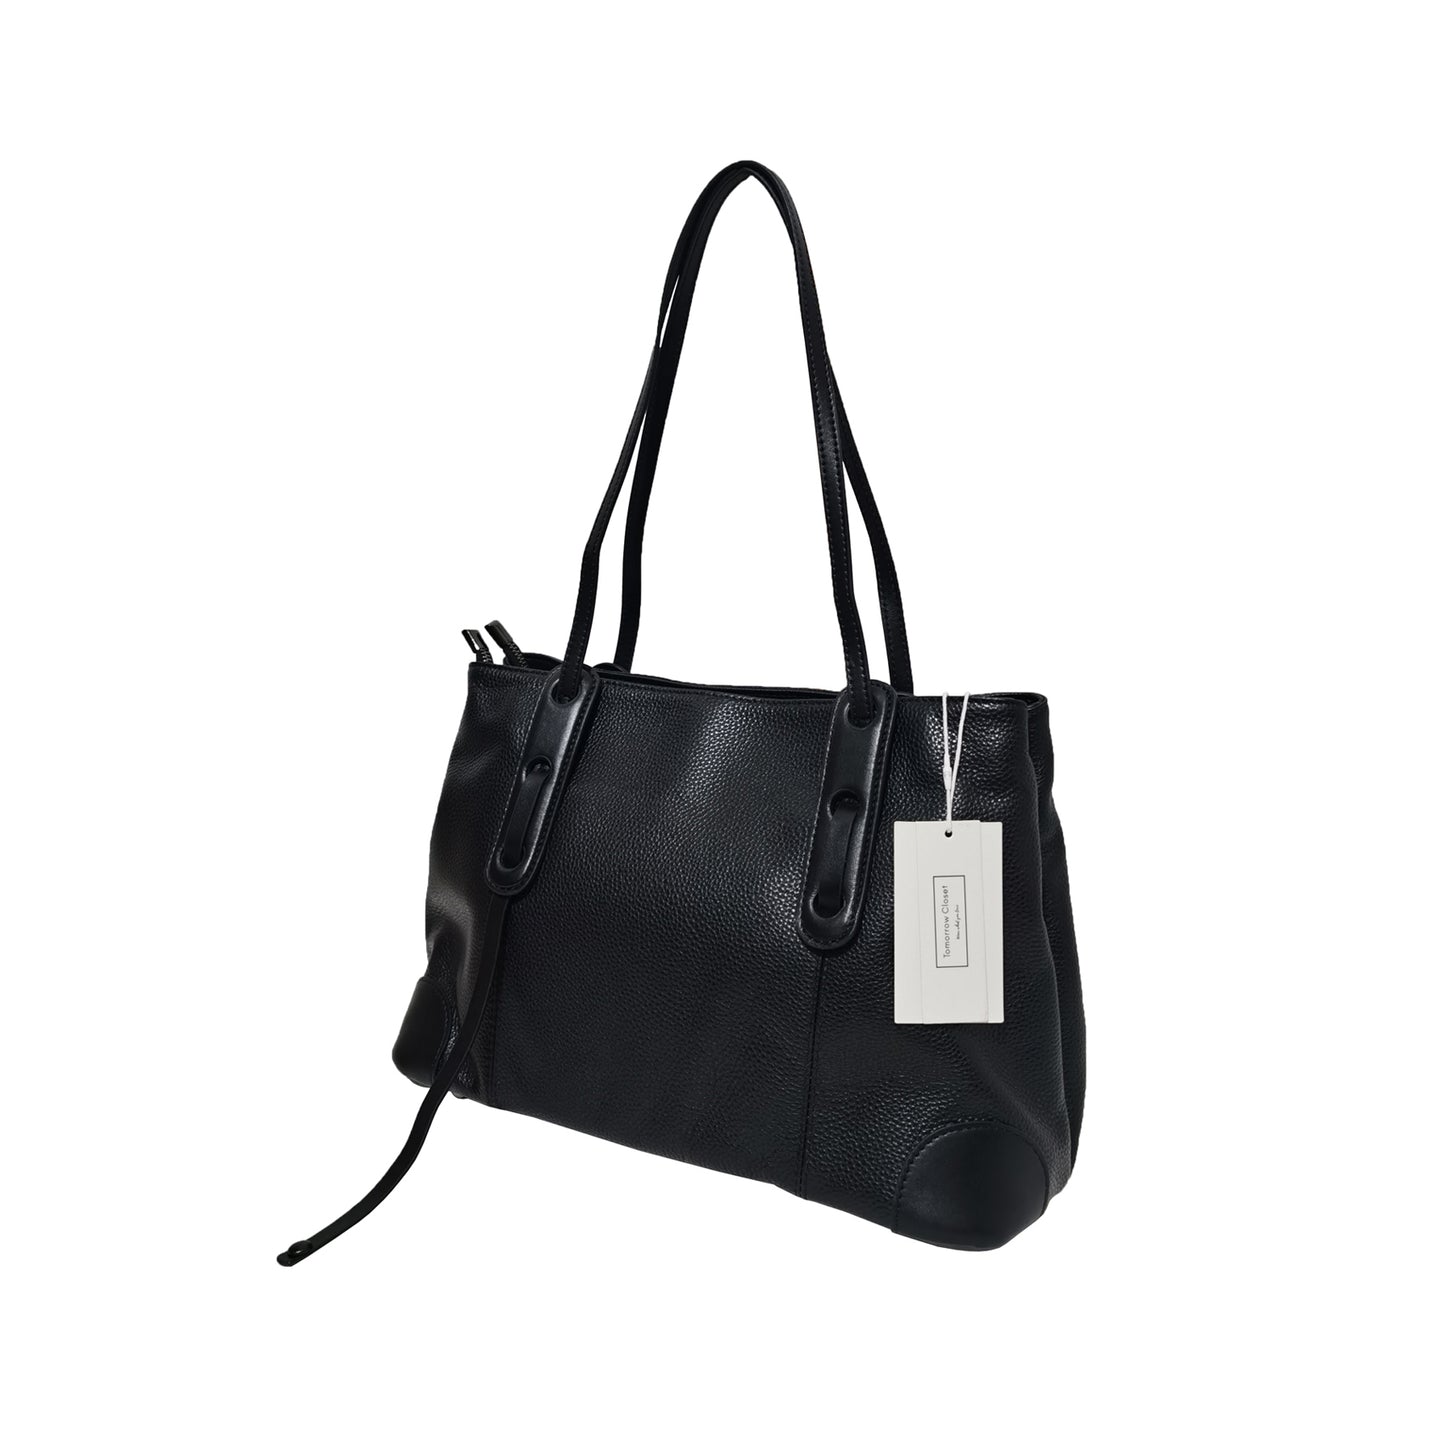 Women's genuine cowhide leather handbag Sophia design